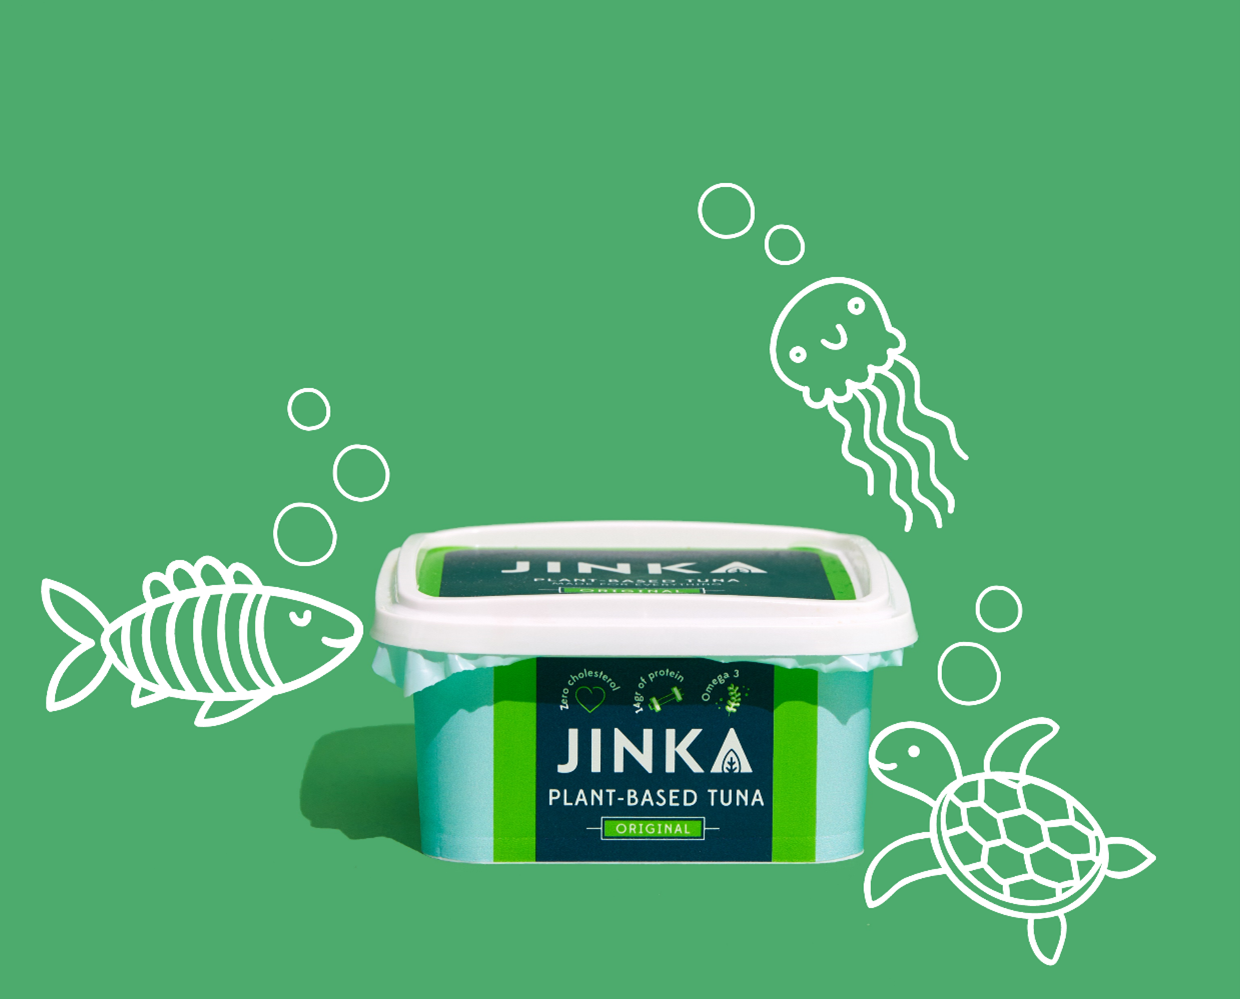 Original Jinka, Plant-Based Tuna